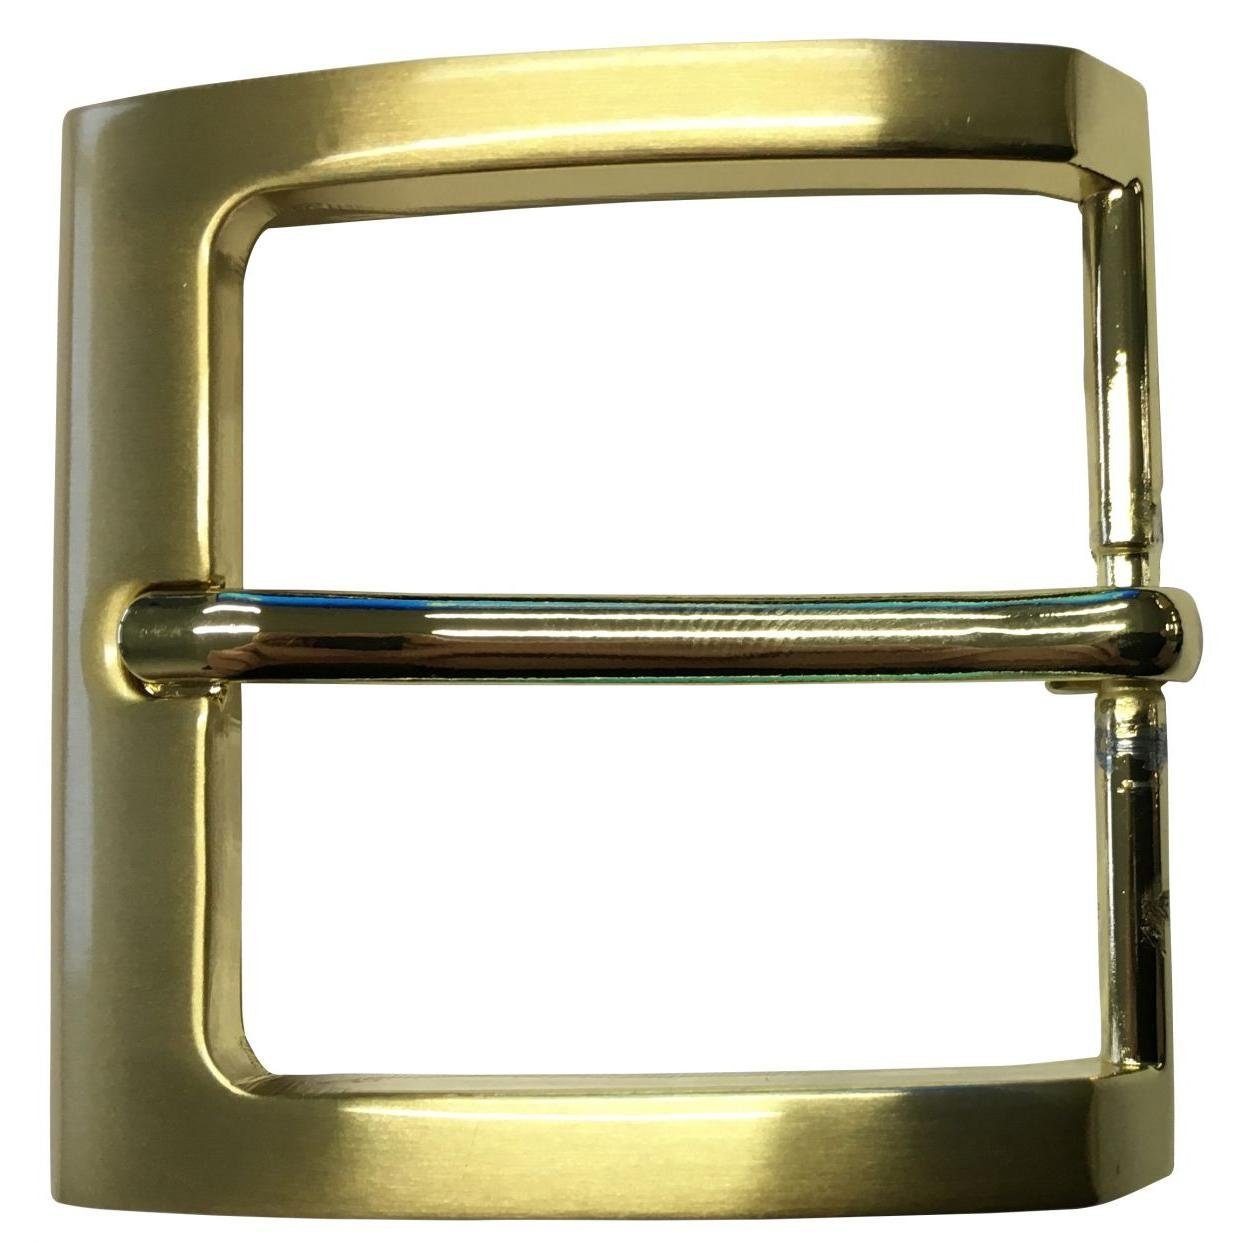 BELTINGER Gürtelschnalle 4,0 cm - Wechselschließe Gürtelschließe 40mm - Dorn-Schließe - Gürtel Gold, Matt